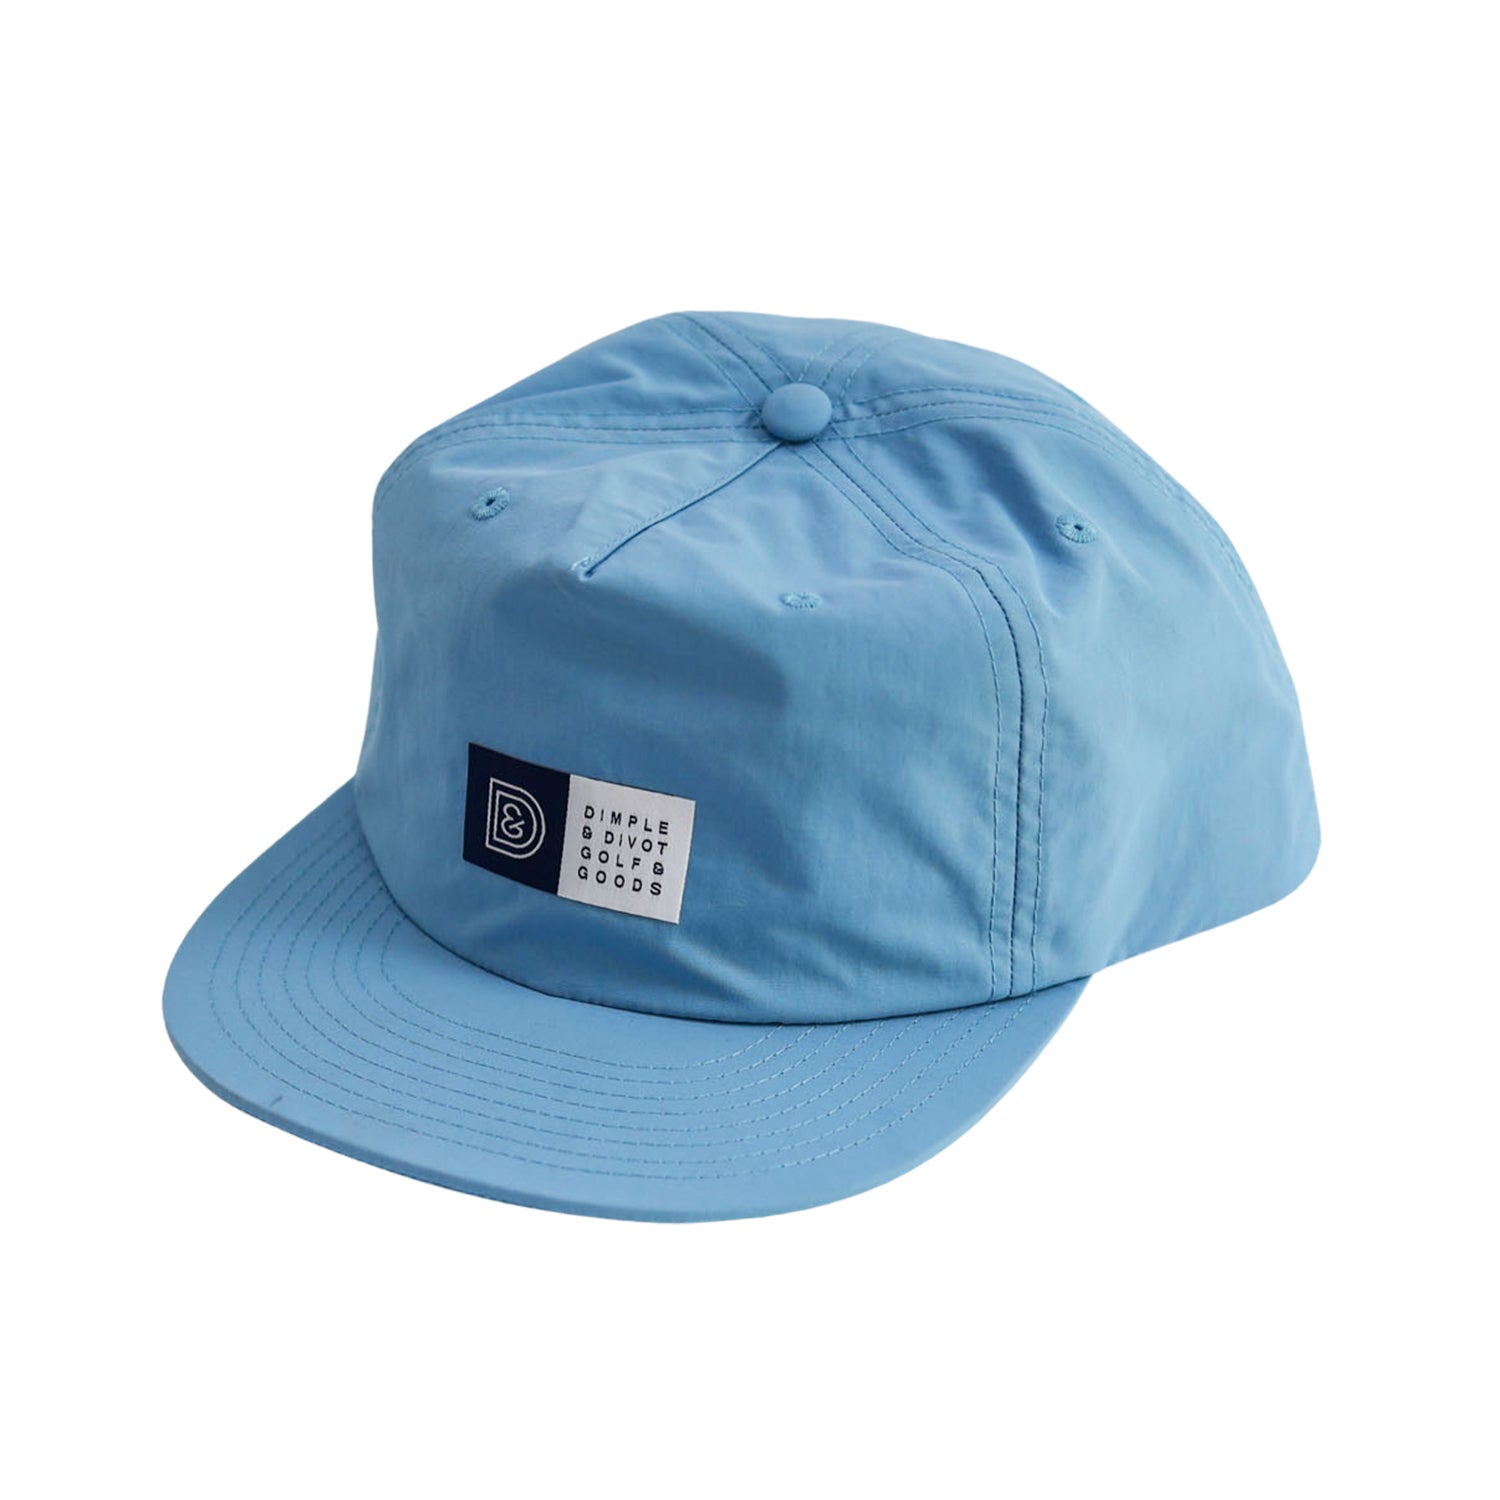 50/50 Patch - Baby Blue - Surf Cap